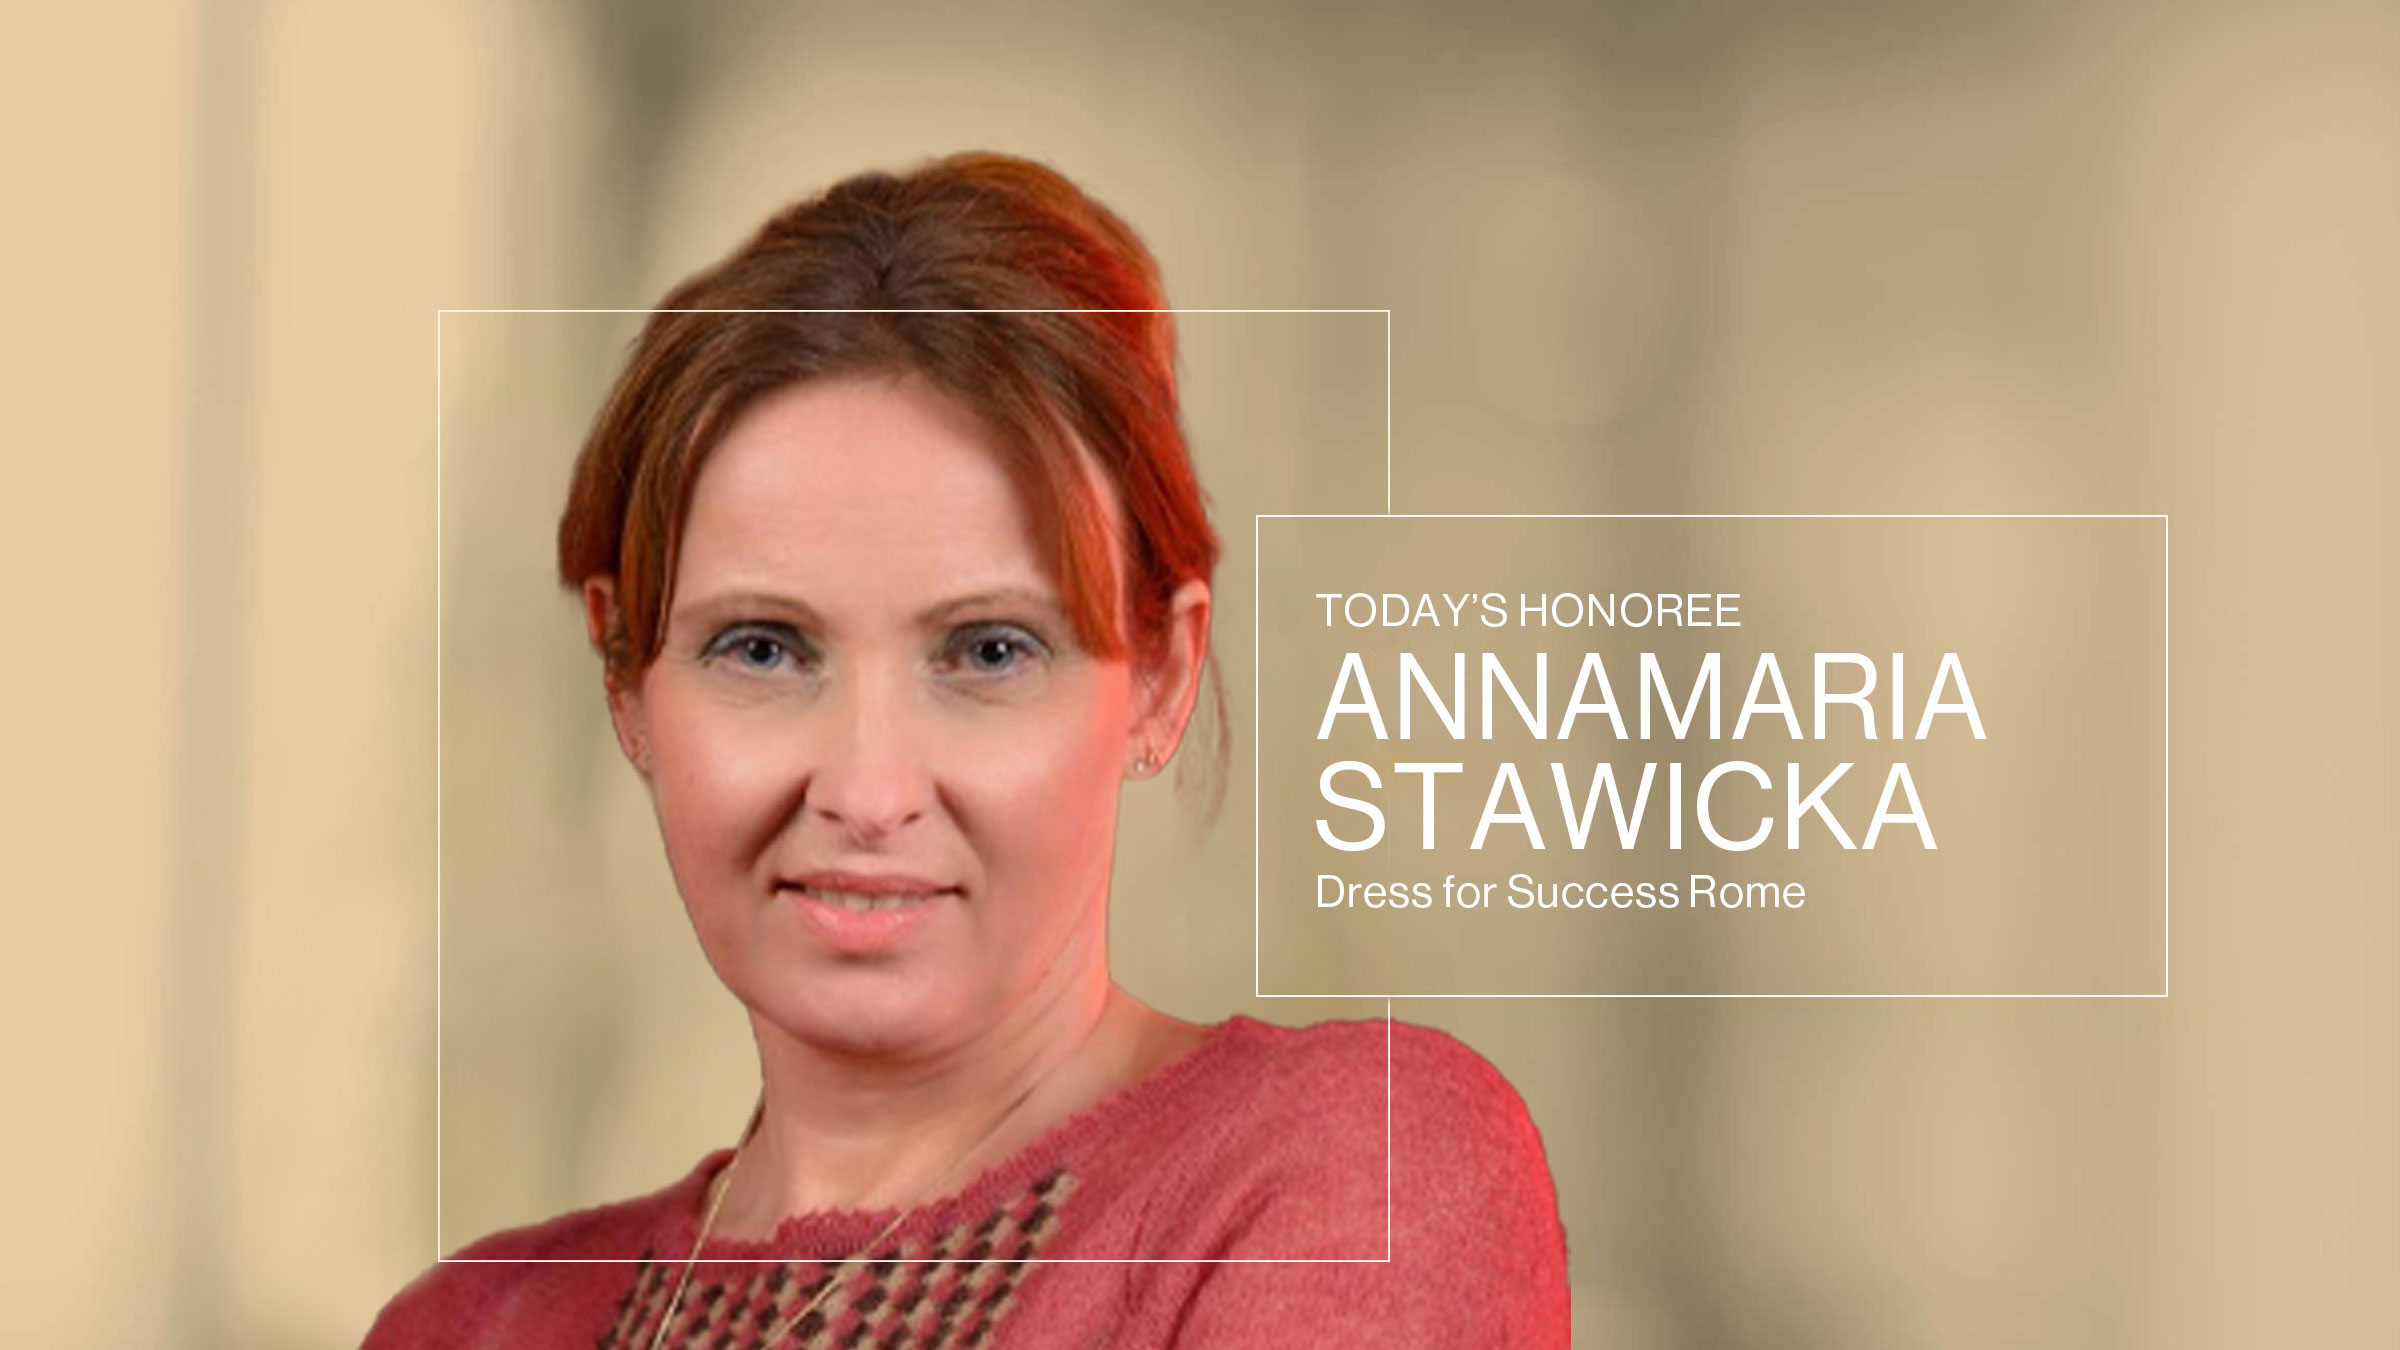 Annamaria Stawicka